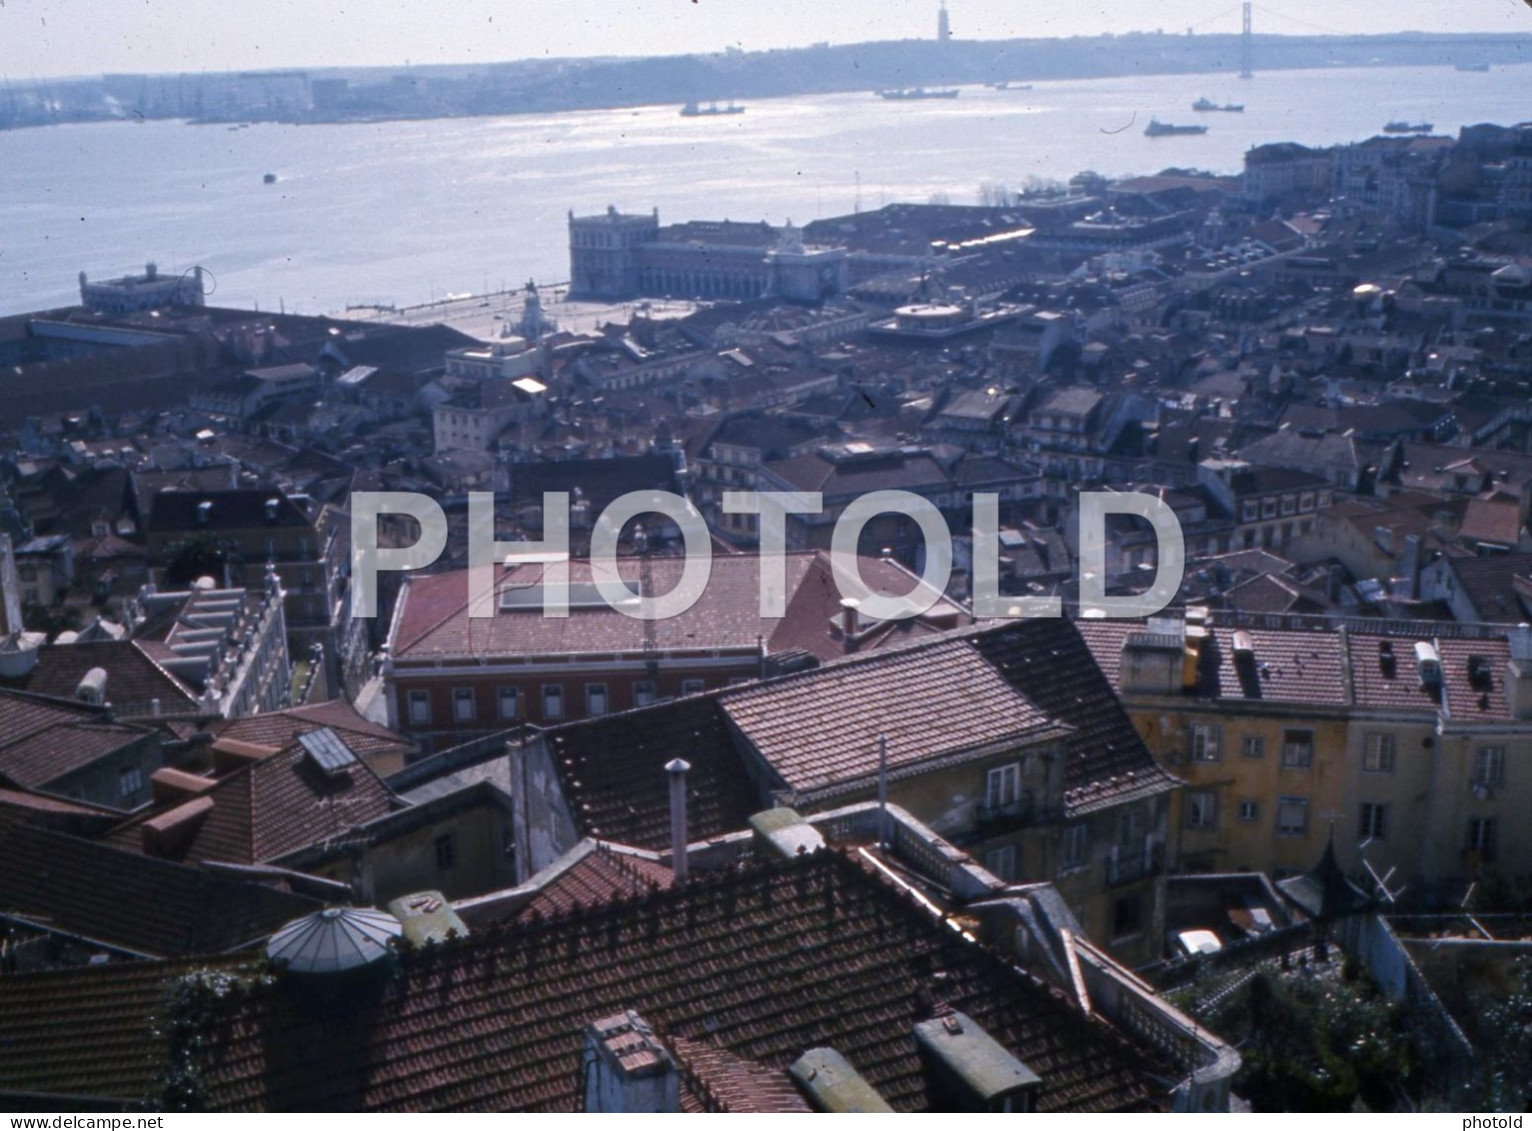 4 SLIDES SET 1984 LISBOA LISBON PORTUGAL 16mm DIAPOSITIVE SLIDE Not PHOTO No FOTO NB4047 - Diapositives (slides)